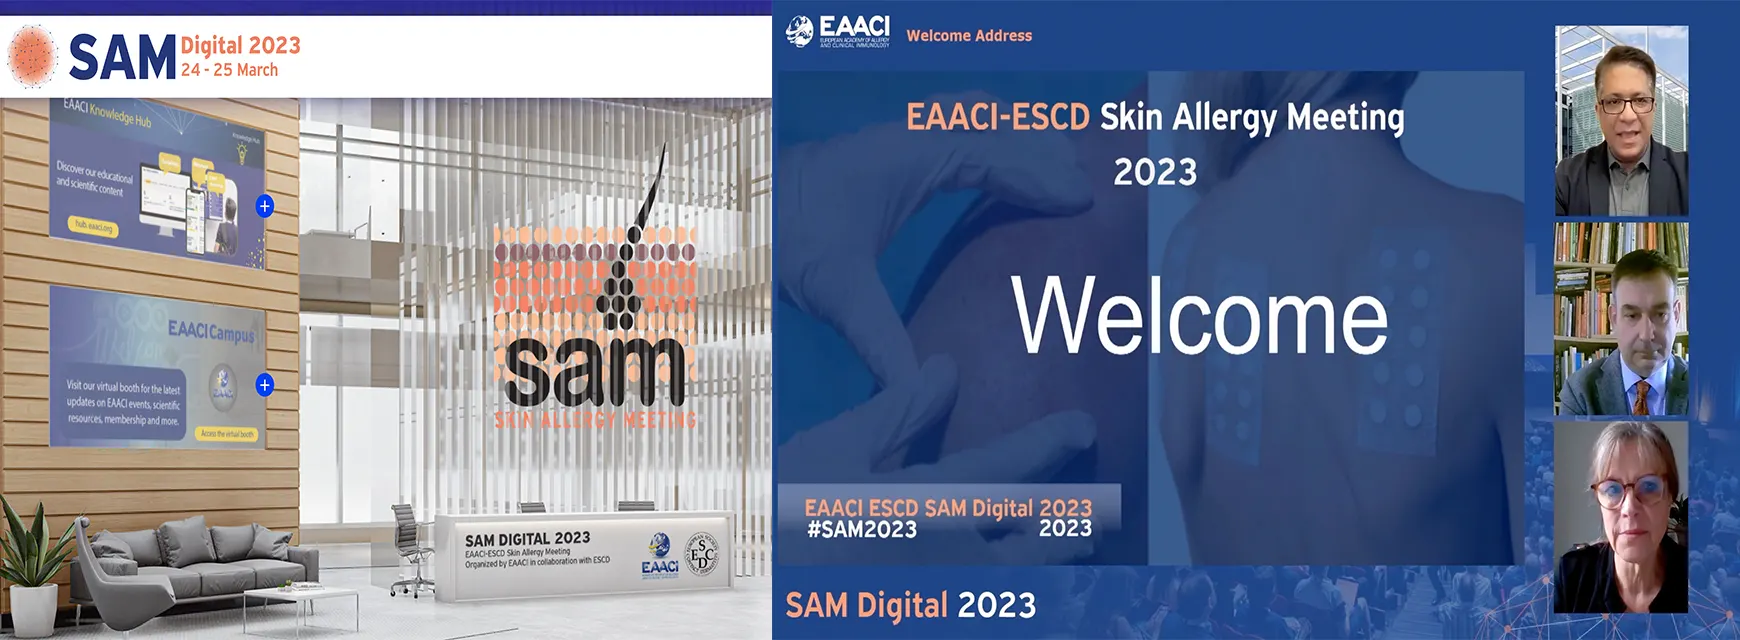 EAACI-ESCD Skin Allergy Meeting